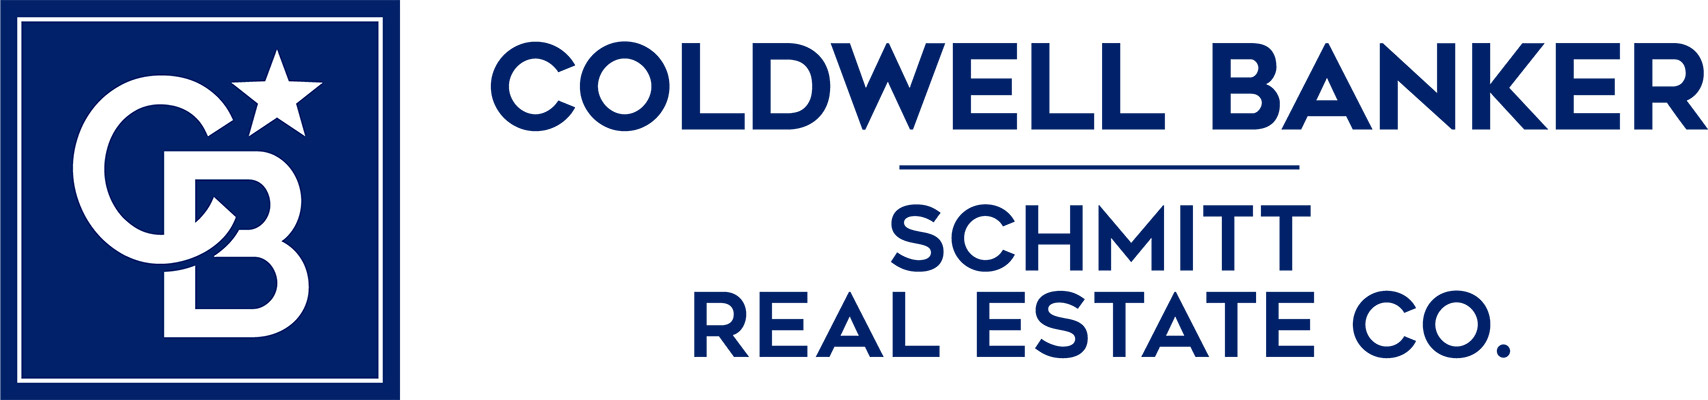 Jonathan Poortman - Coldwell Banker Logo